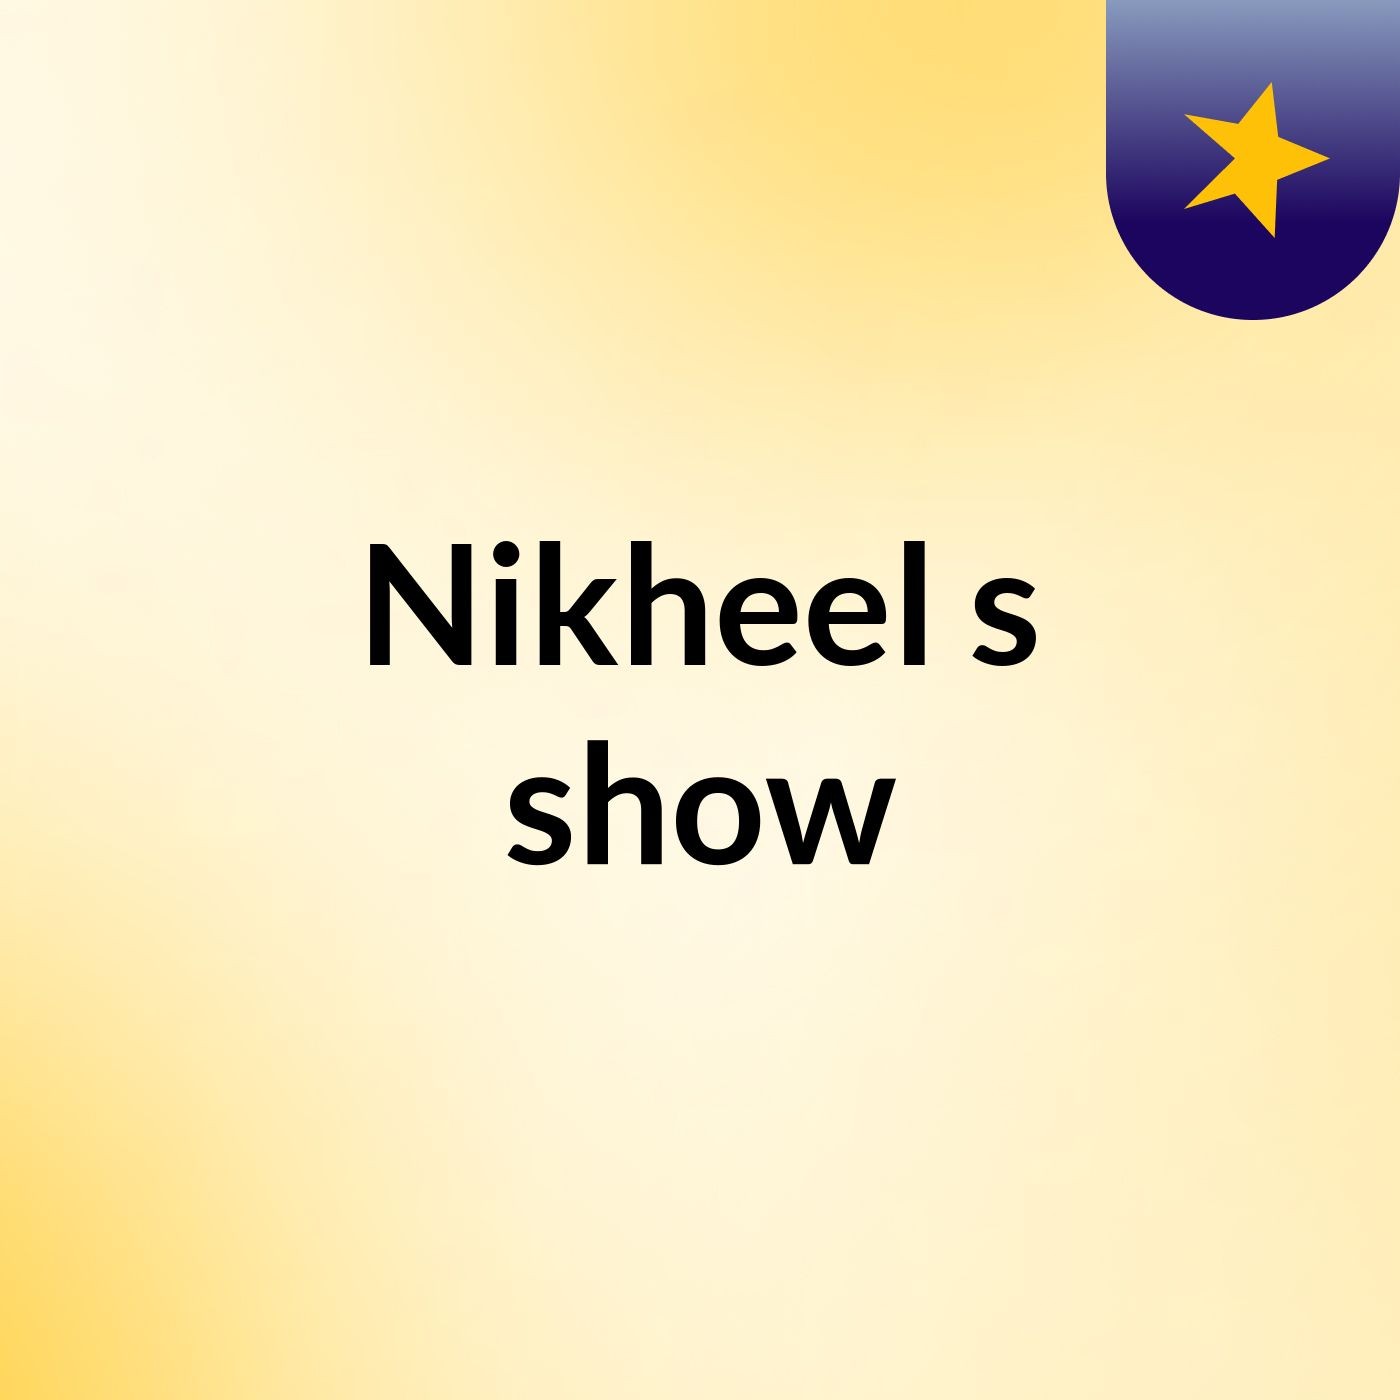 Nikheel's show